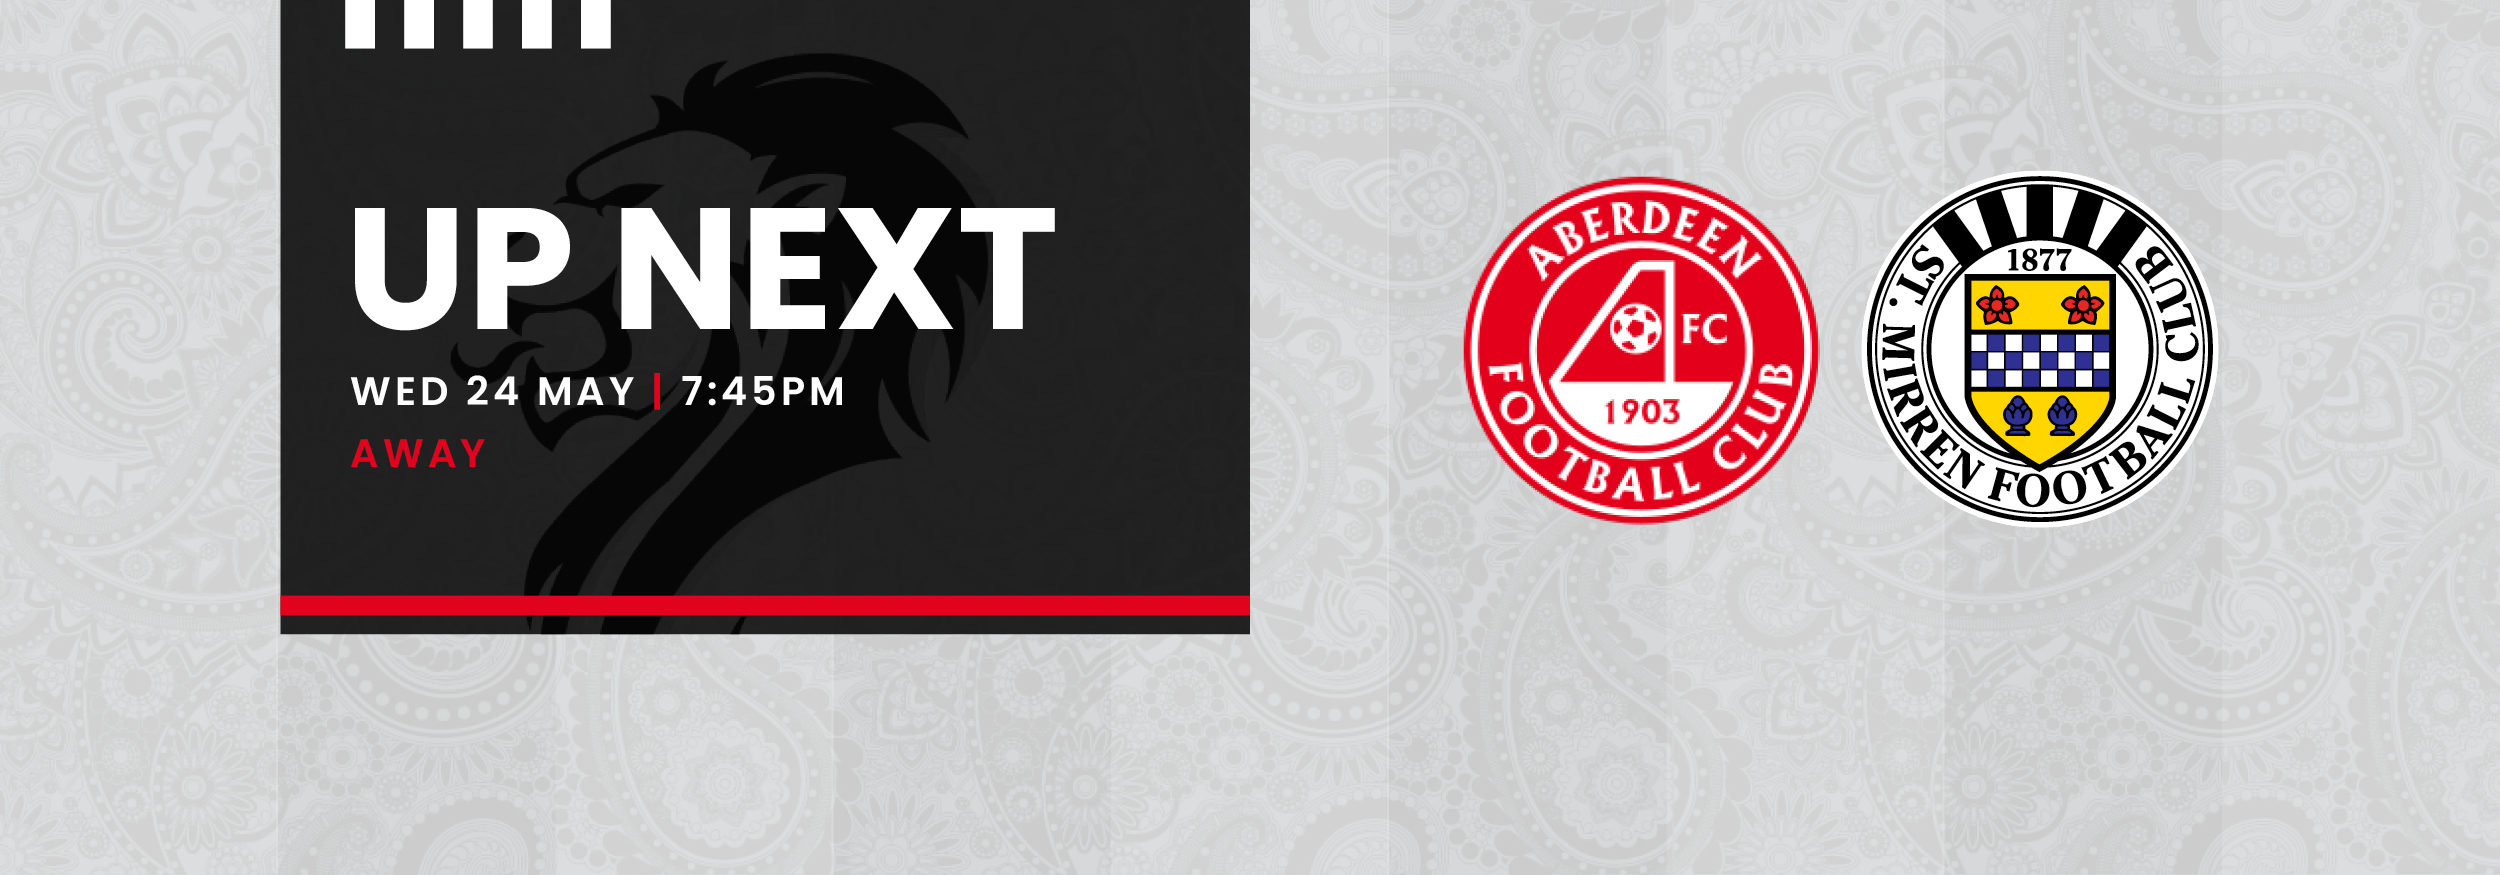 Up Next: Aberdeen v St Mirren (24th May)